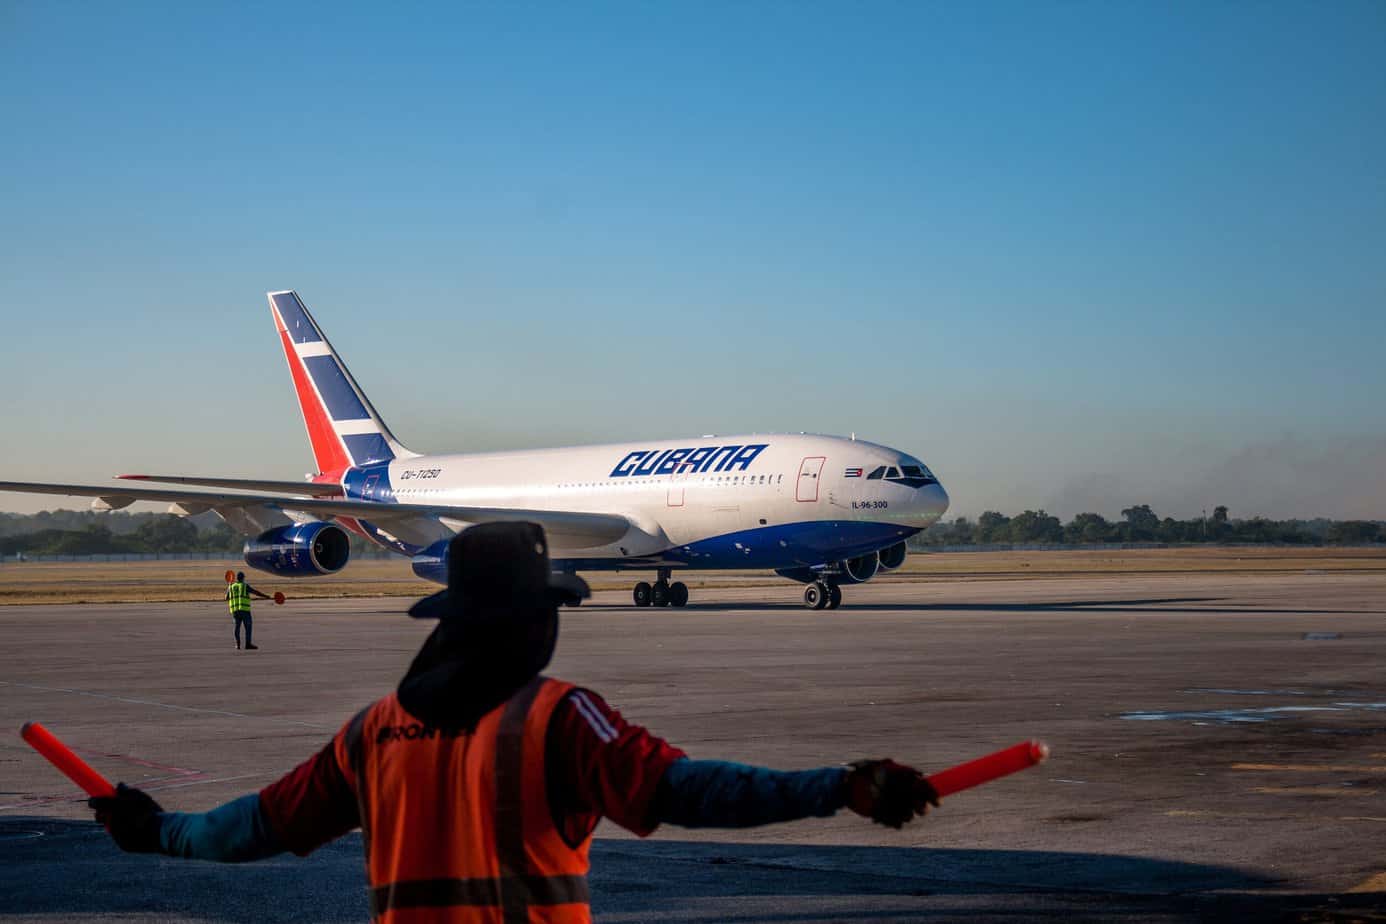 Cubana airplane arriving at the Havana Cuba airport